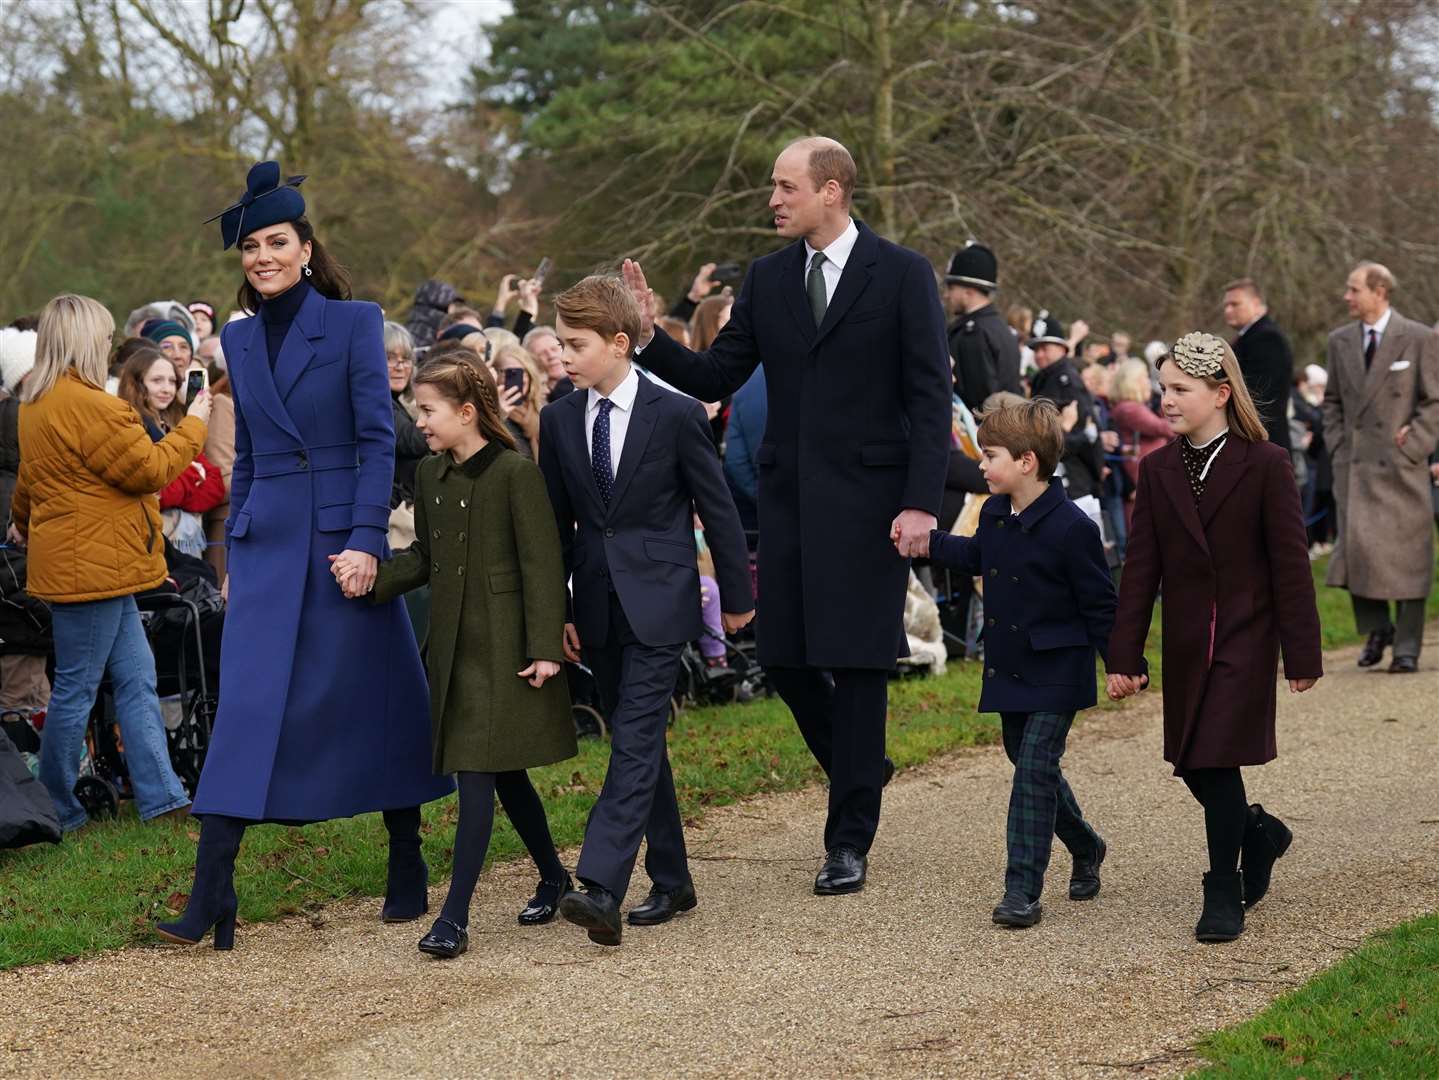 Princess Charlotte set to celebrate ninth birthday